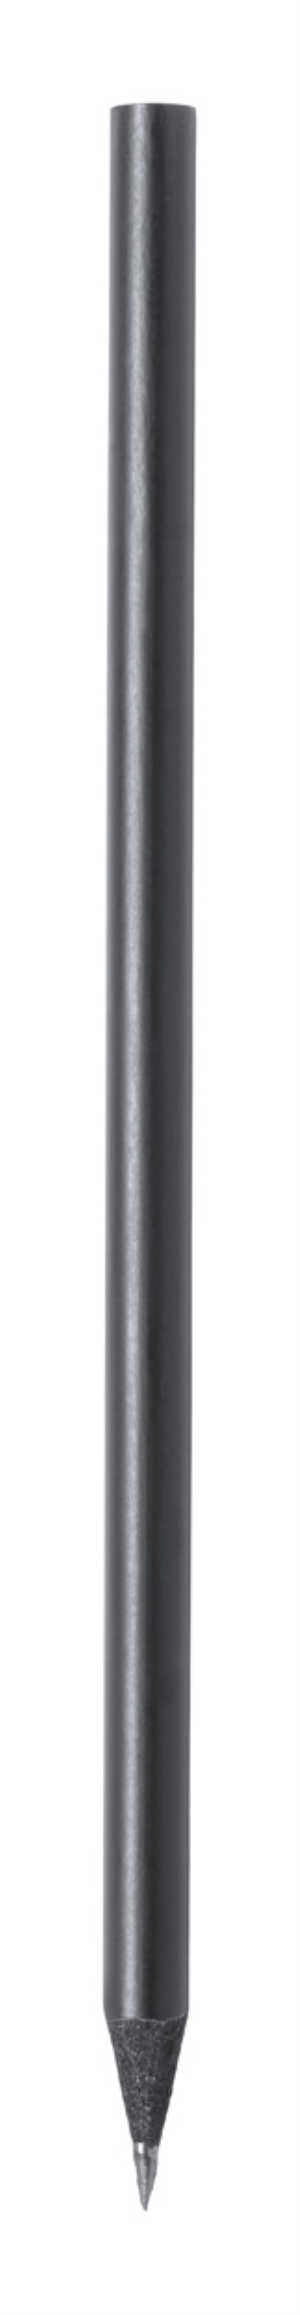 ceruzka Krako, čierna (2)